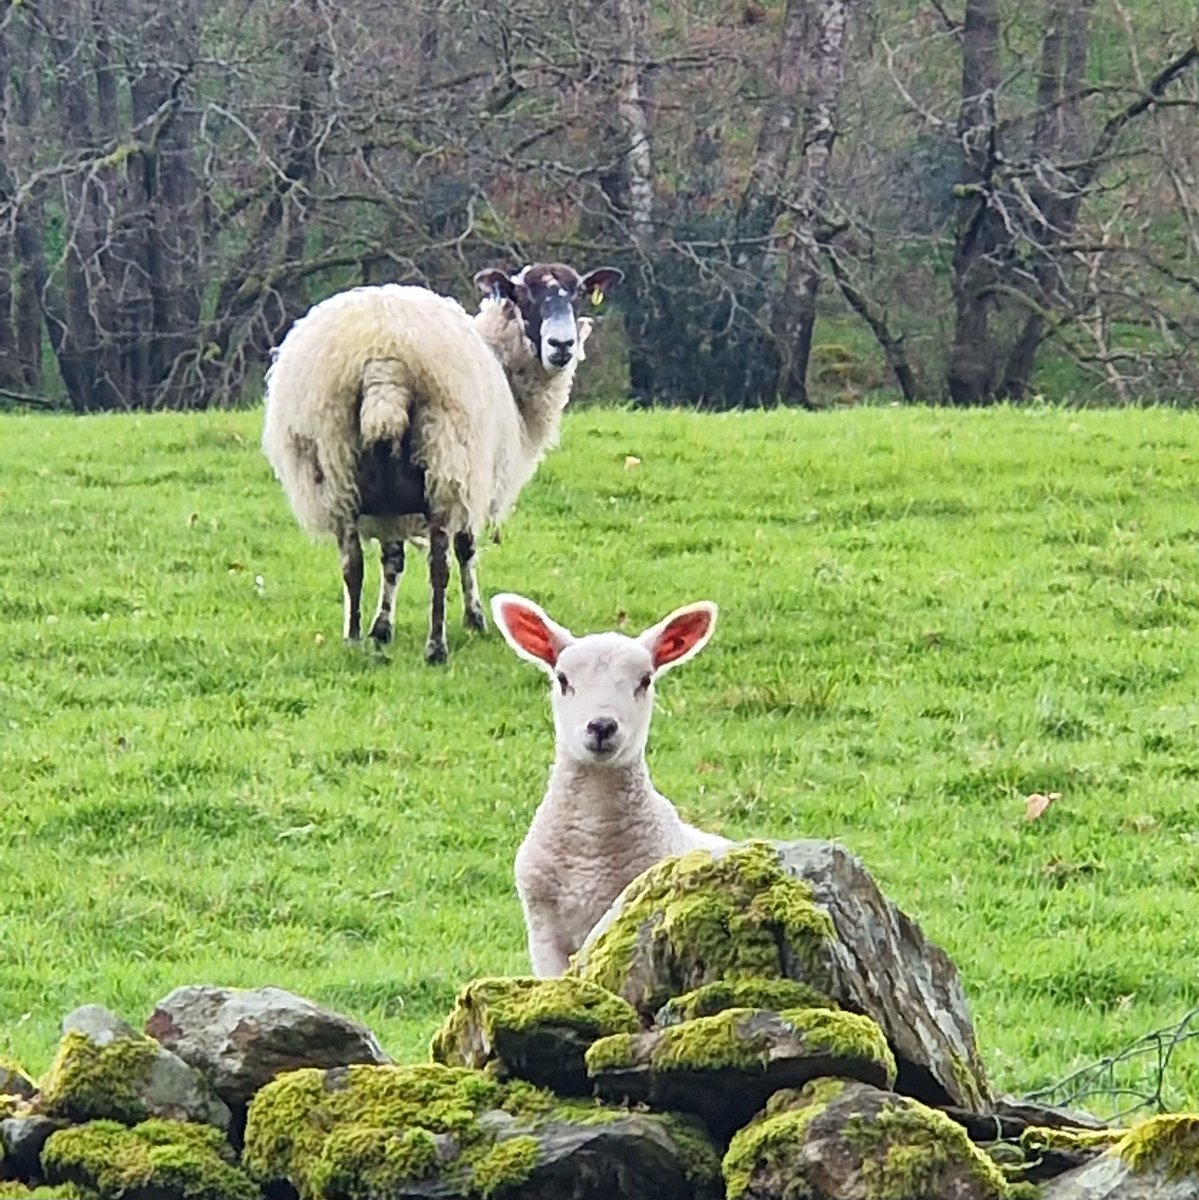 Our delightful new neighbours!

#hilltop #hilltopfarm #lambs #lambingseason #lakedistrict #lakedistrictuk #lakedistrictnationalpark #farming #sheep